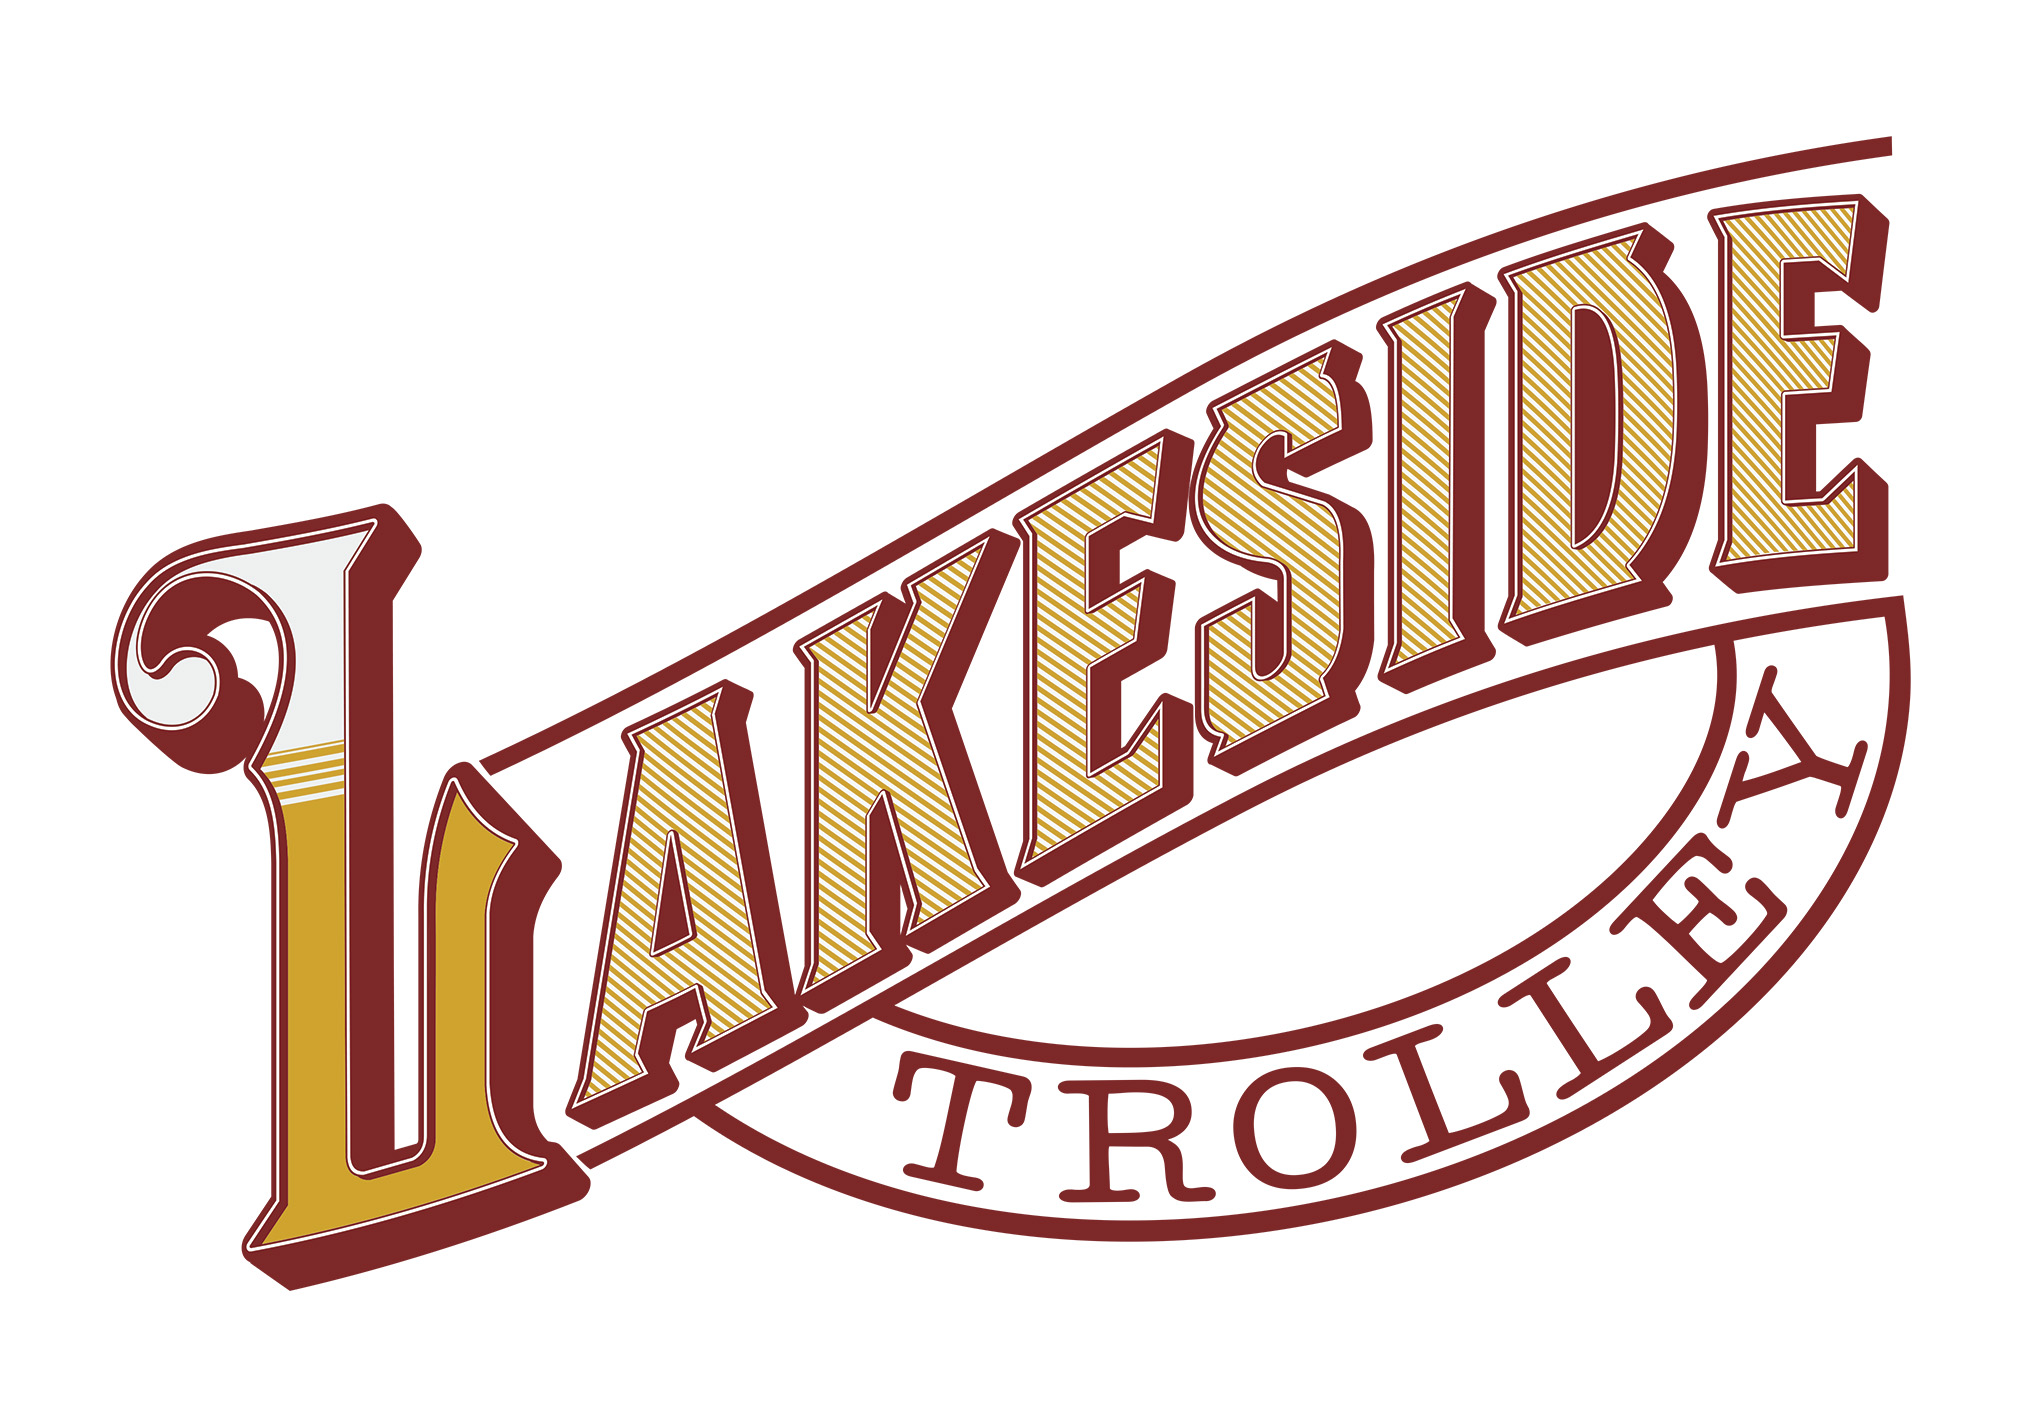 Lakeside Trolley_Logo_jpg@0.5x